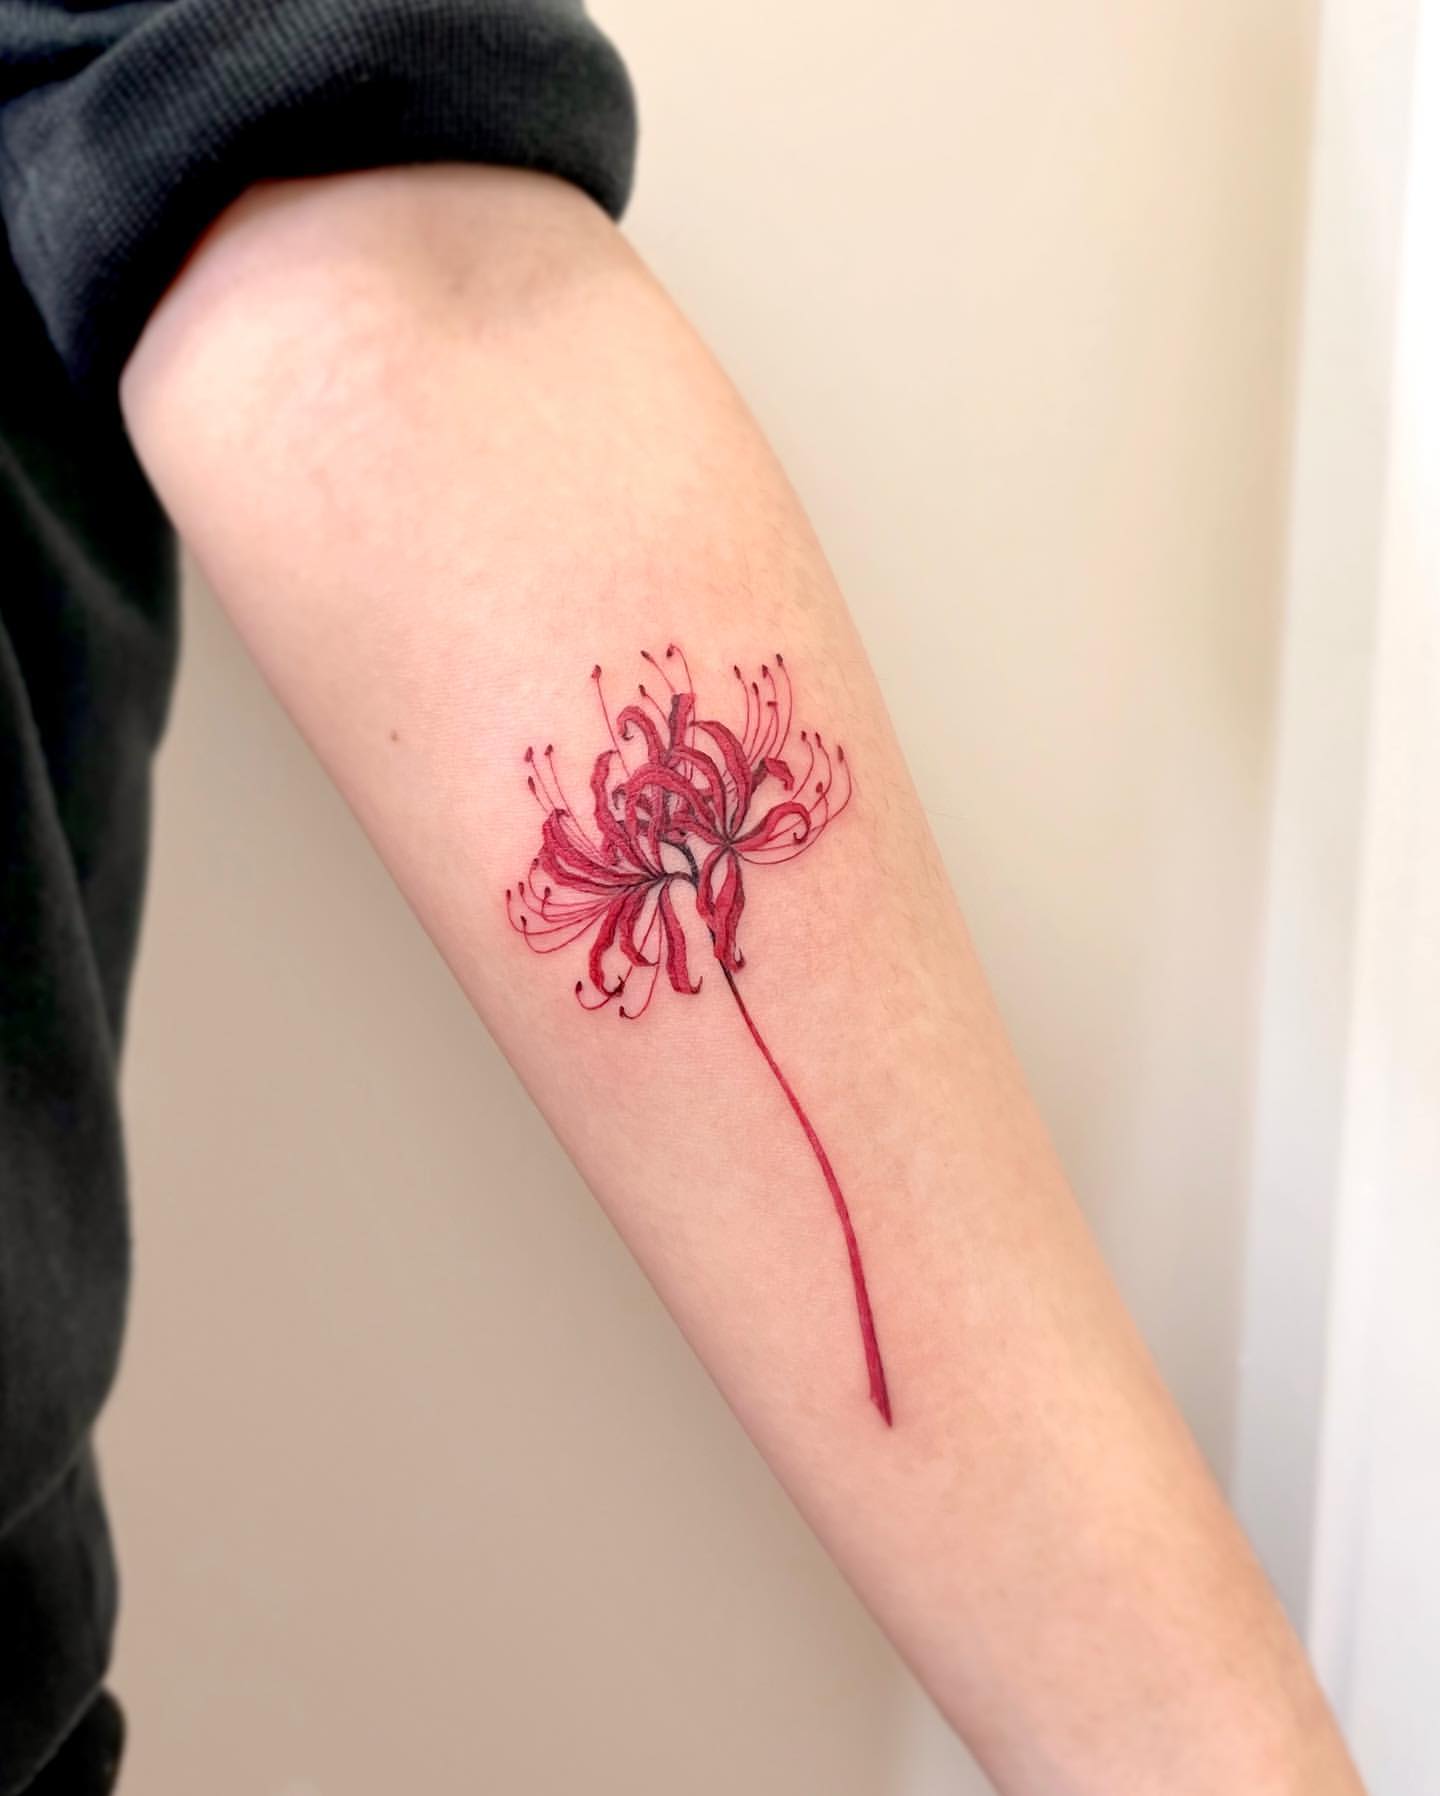 Spider Lily Tattoo Ideas 13